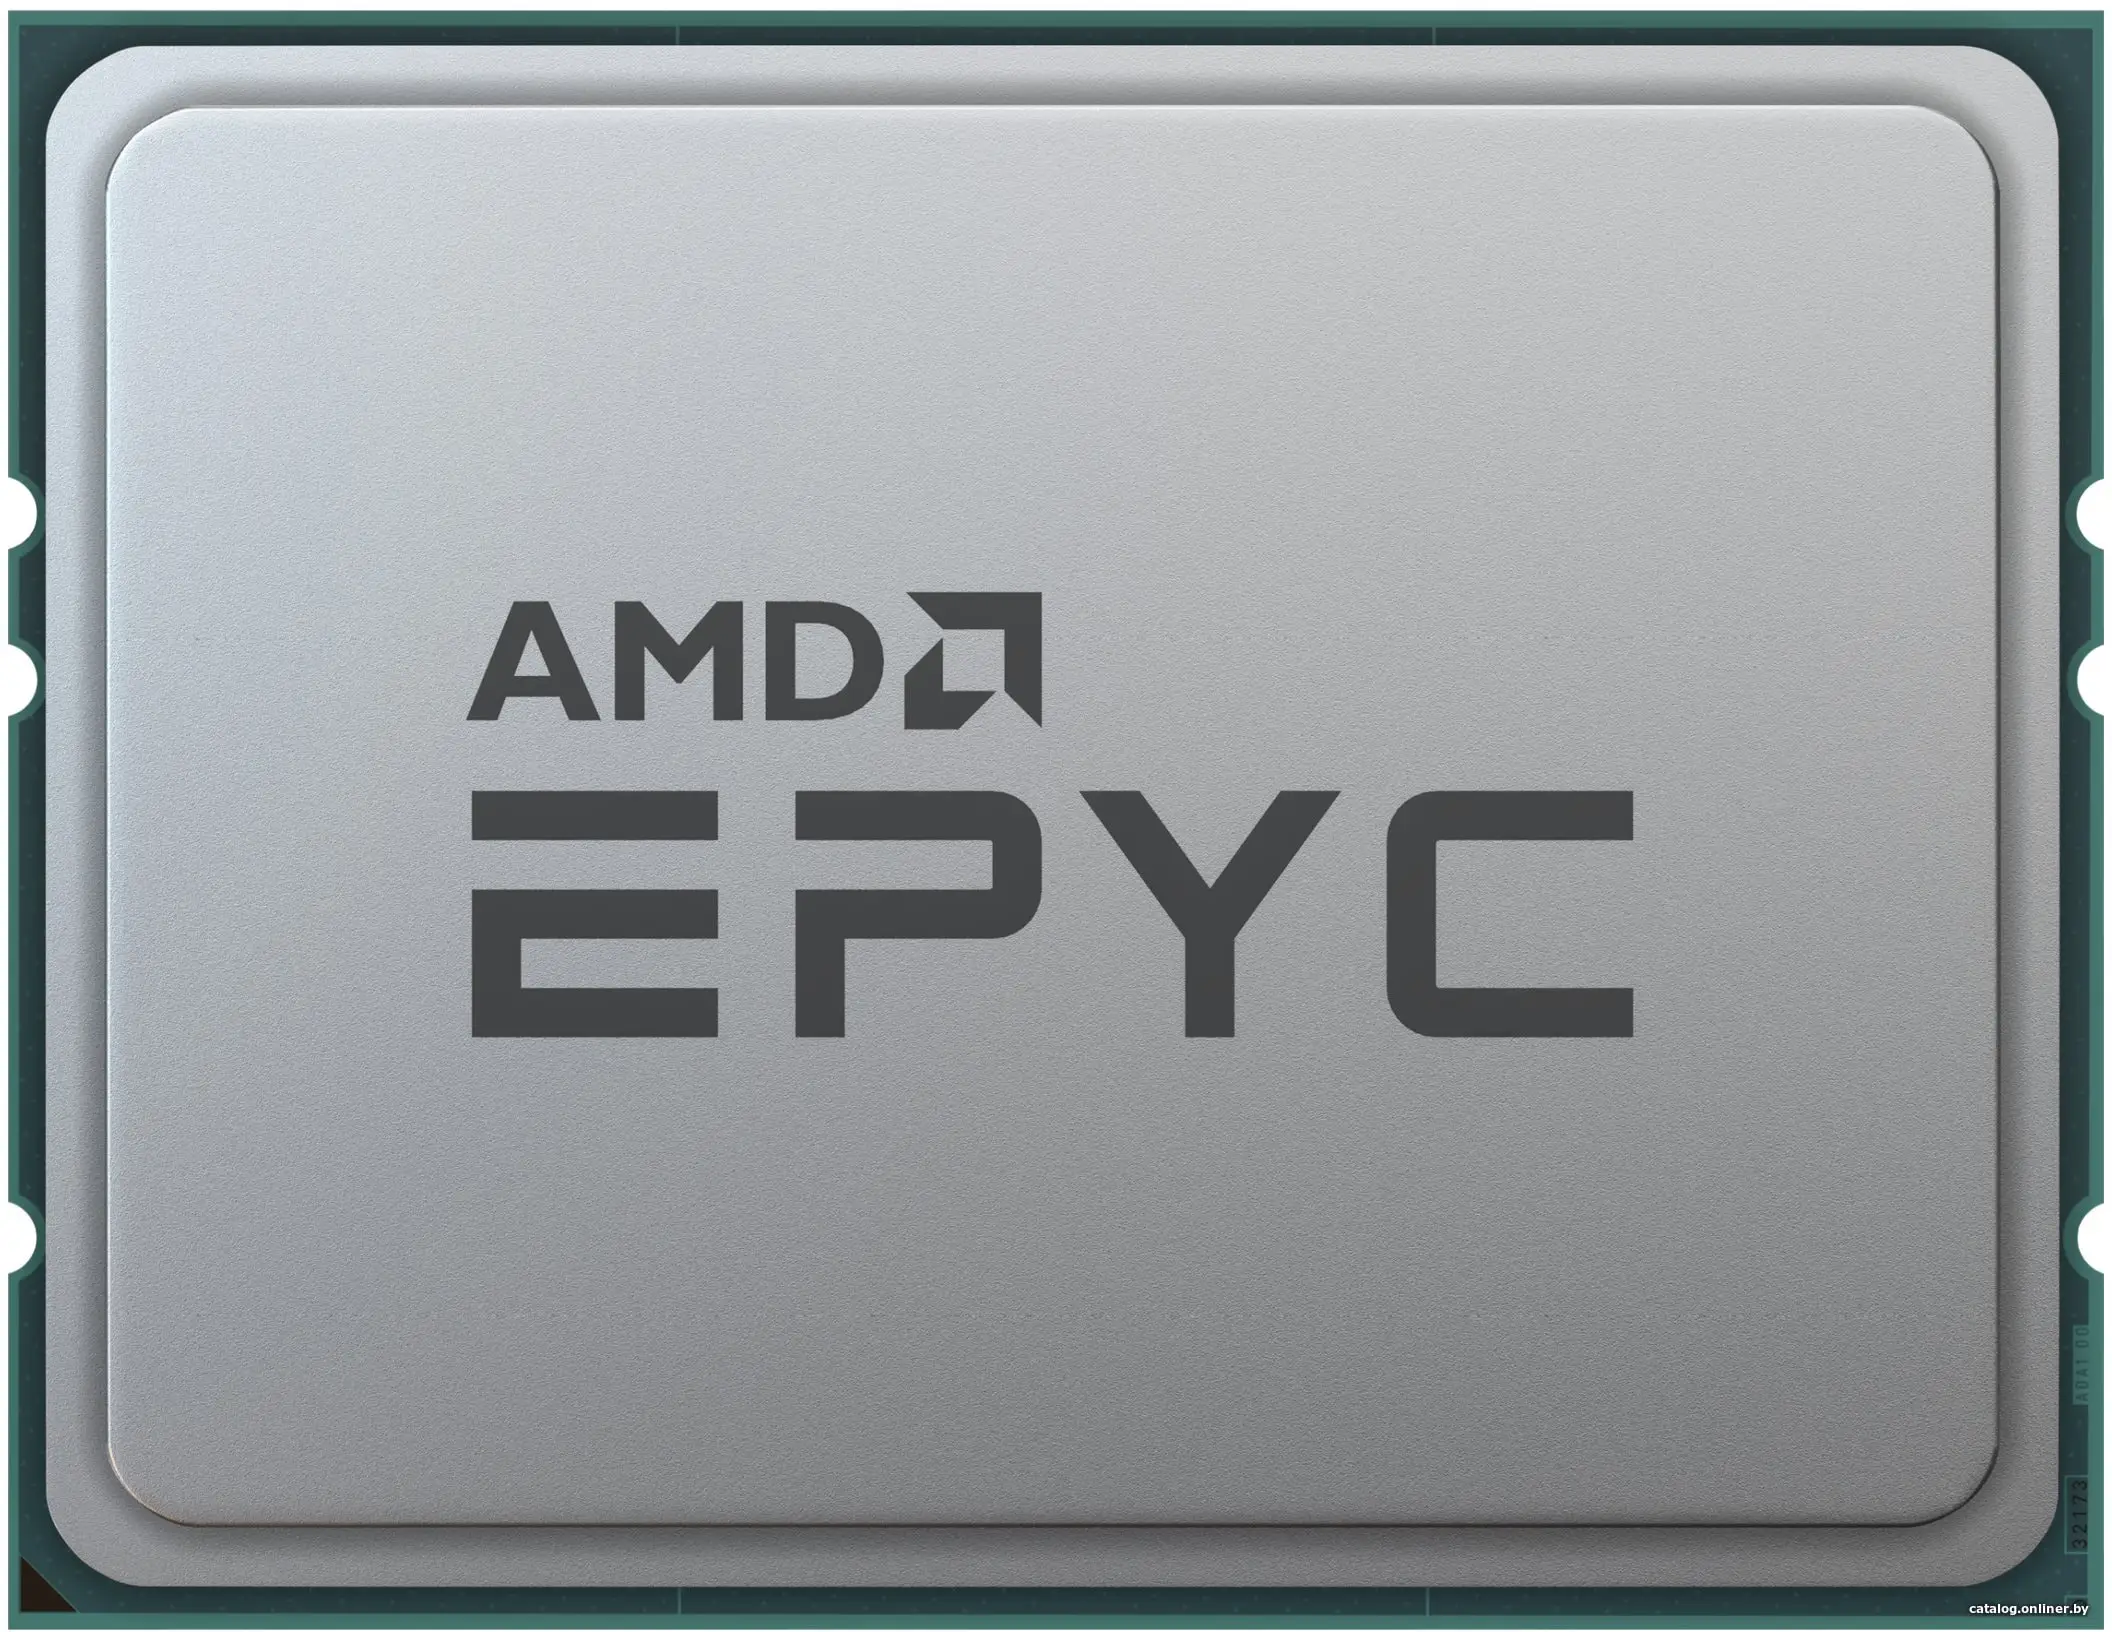 Купить AMD AMD EPYC 7643 48 Cores, 96 Threads, 2.3/3.6GHz, 256M, DDR4-3200, 2S, 225/240W, цена, опт и розница